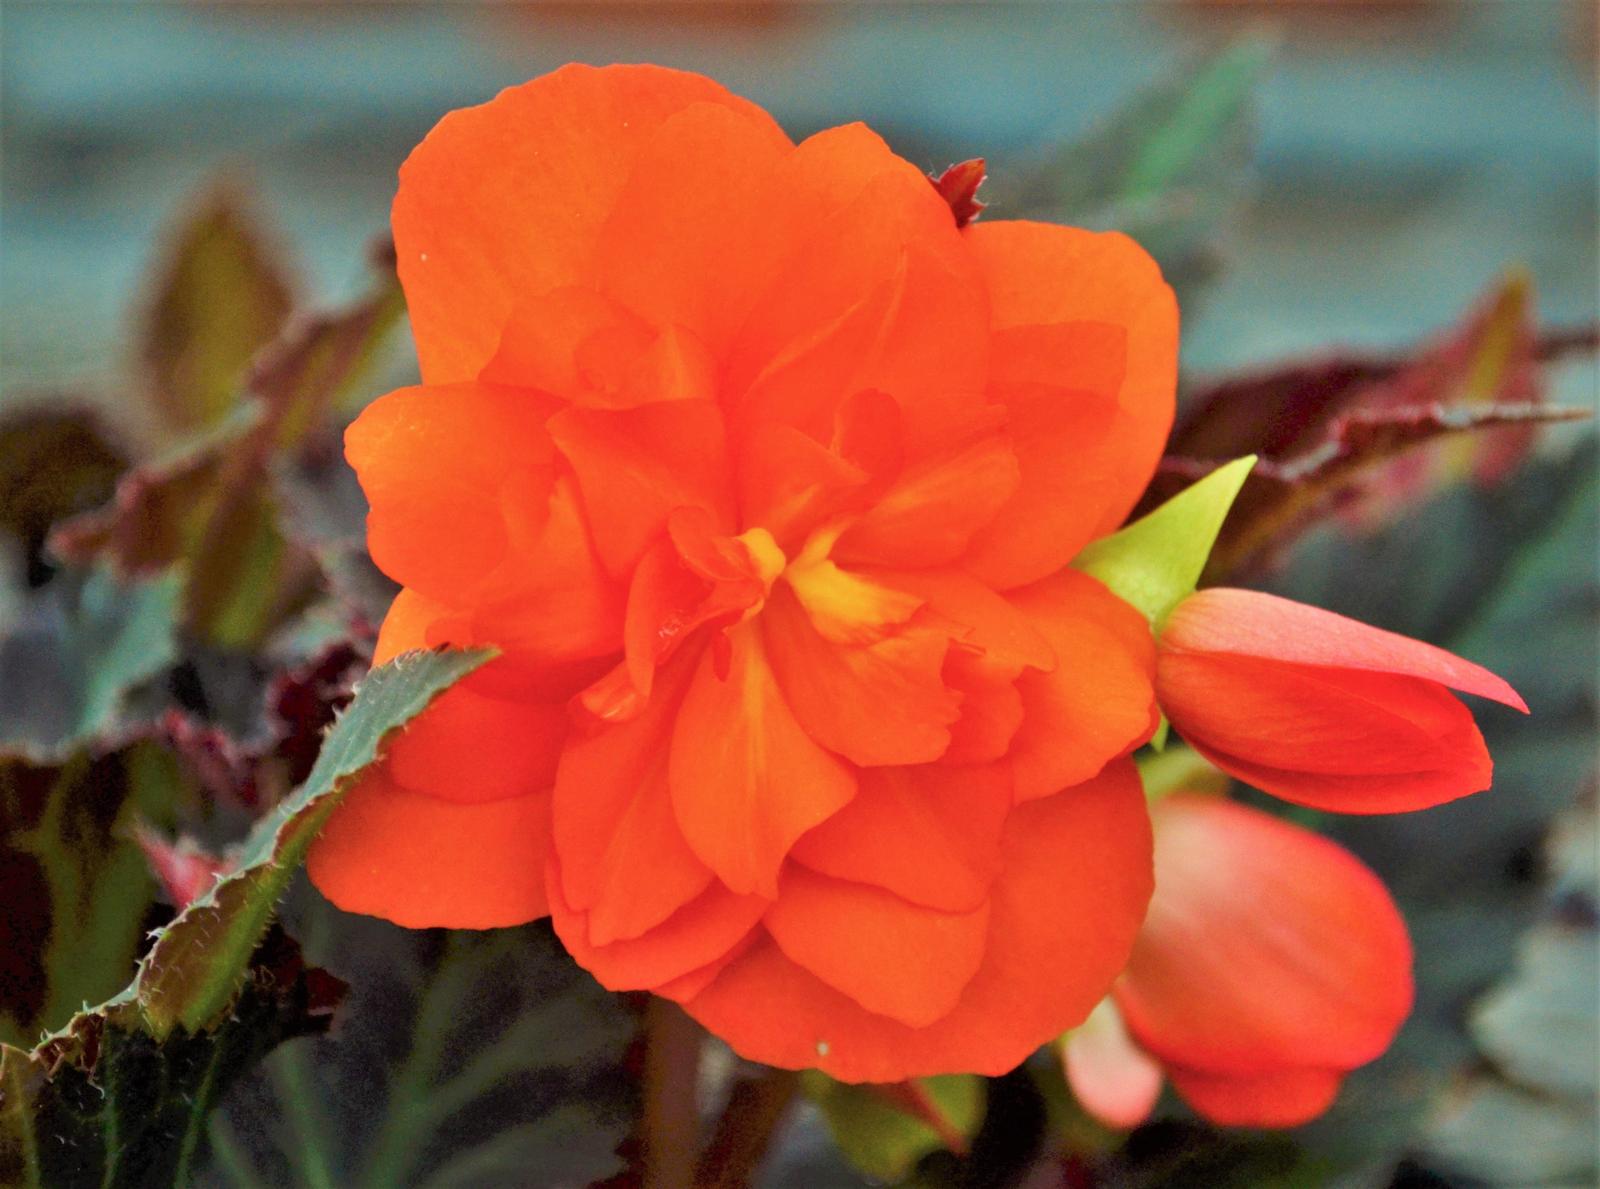 Begonia I'Conia Portofino 'Hot Orange' - Begonia from Hillcrest Nursery